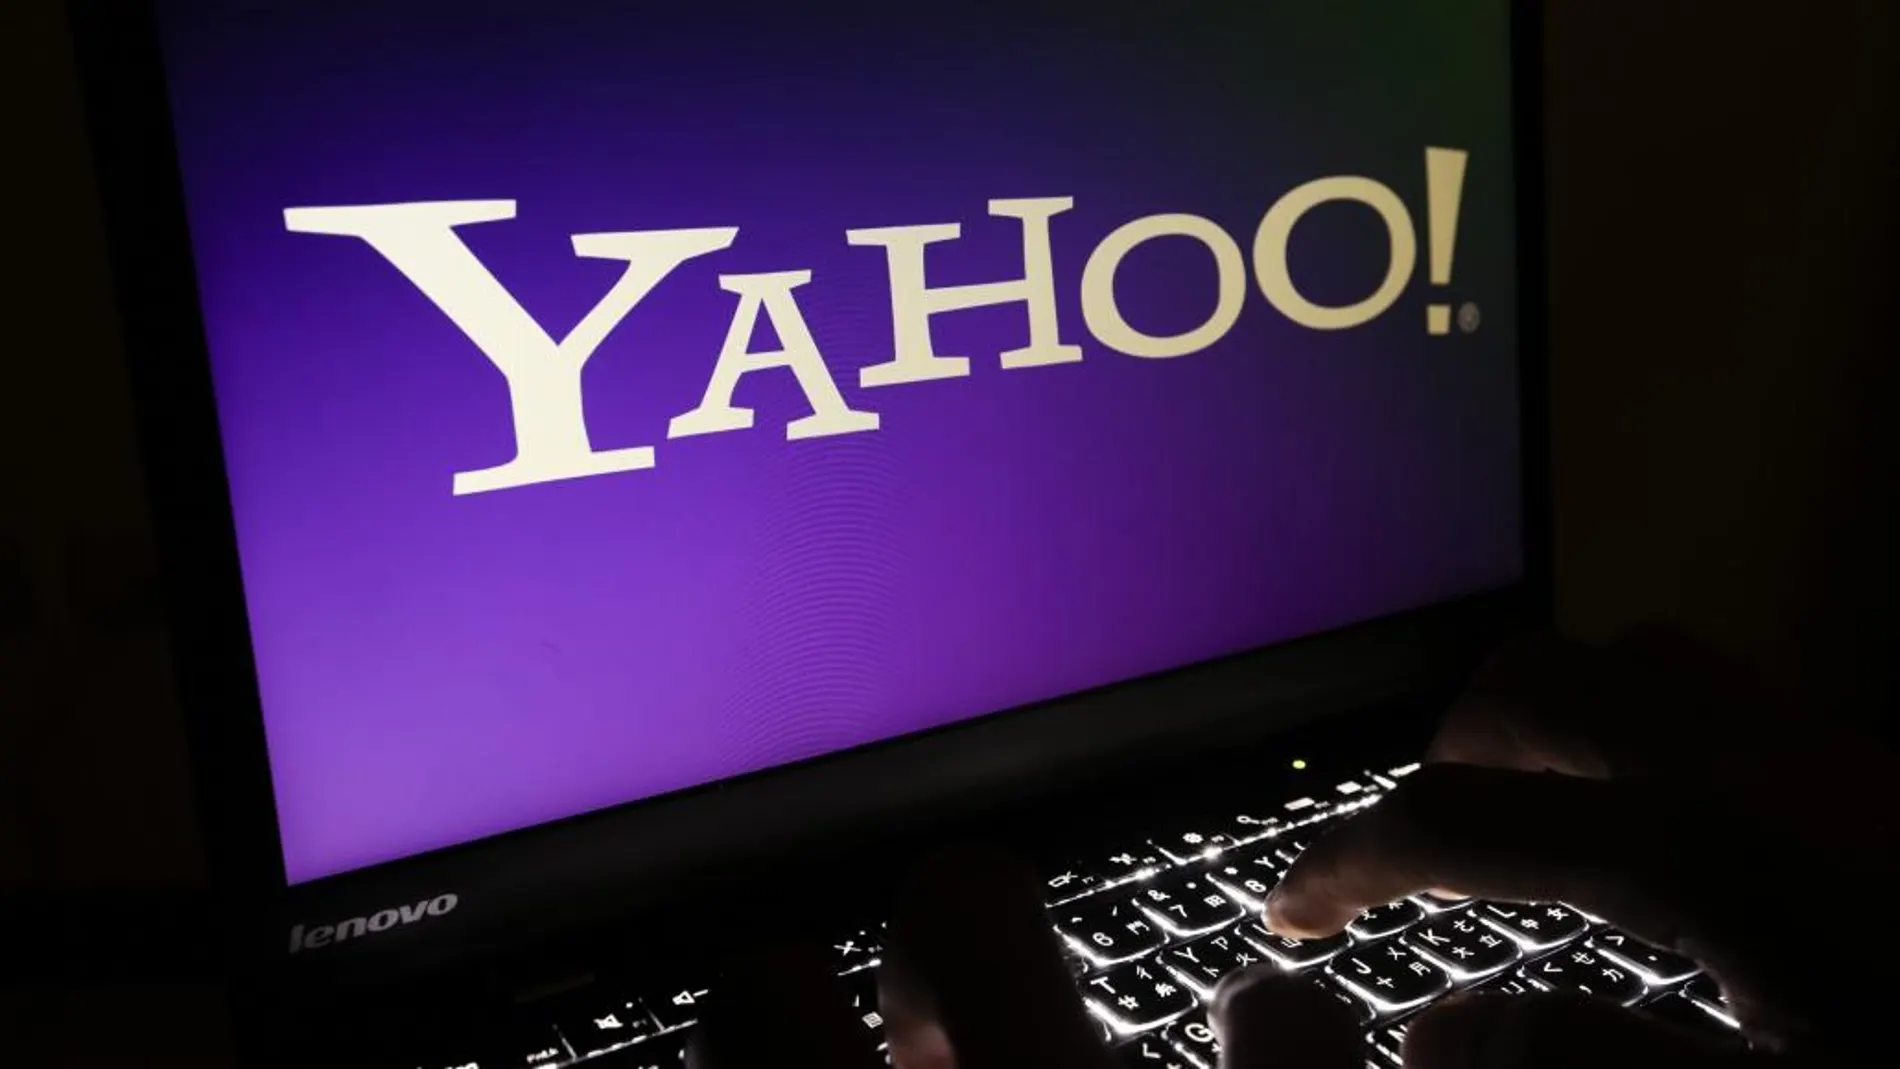 Yahoo ha sido víctima de un gigantesco robo de información